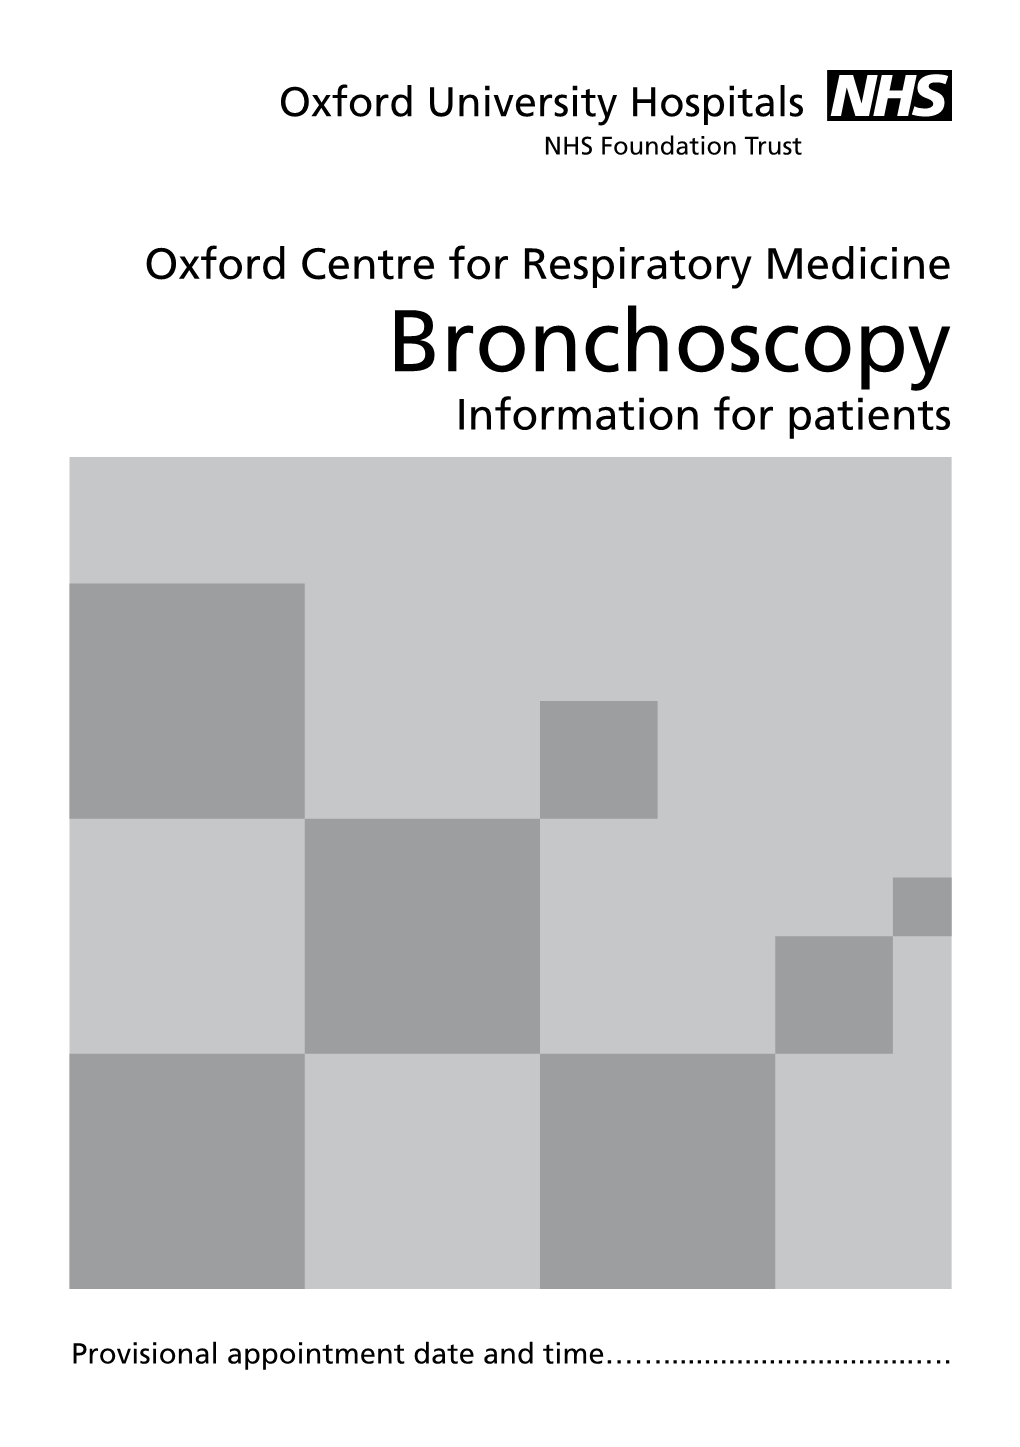 Bronchoscopy Information for Patients